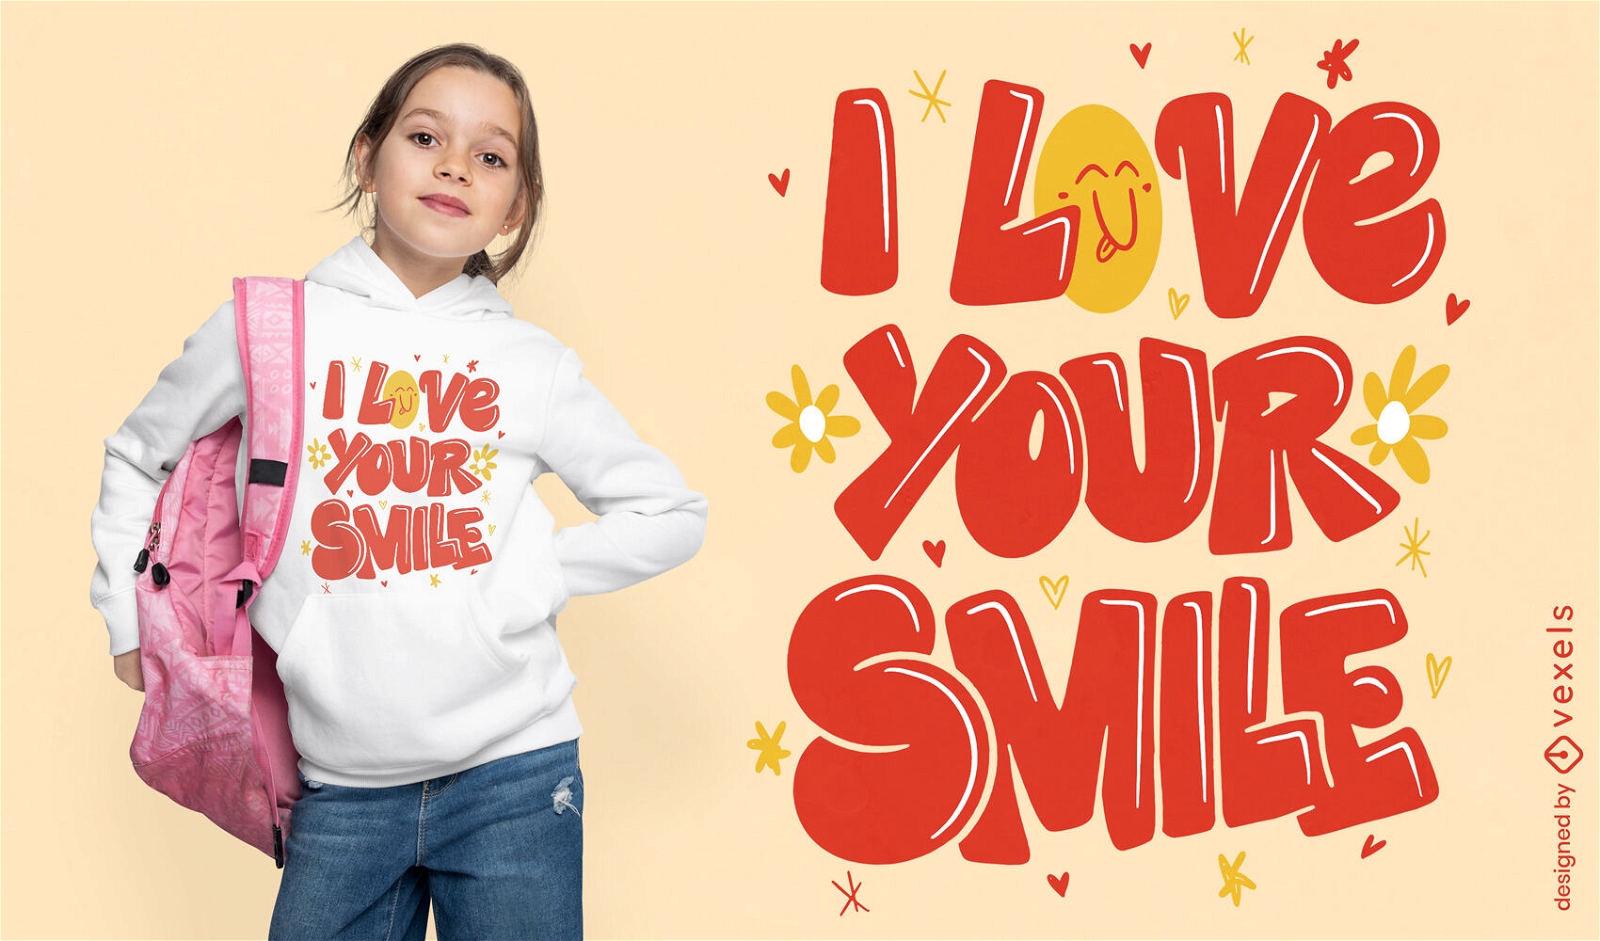 Love your smile children's t-shirt design